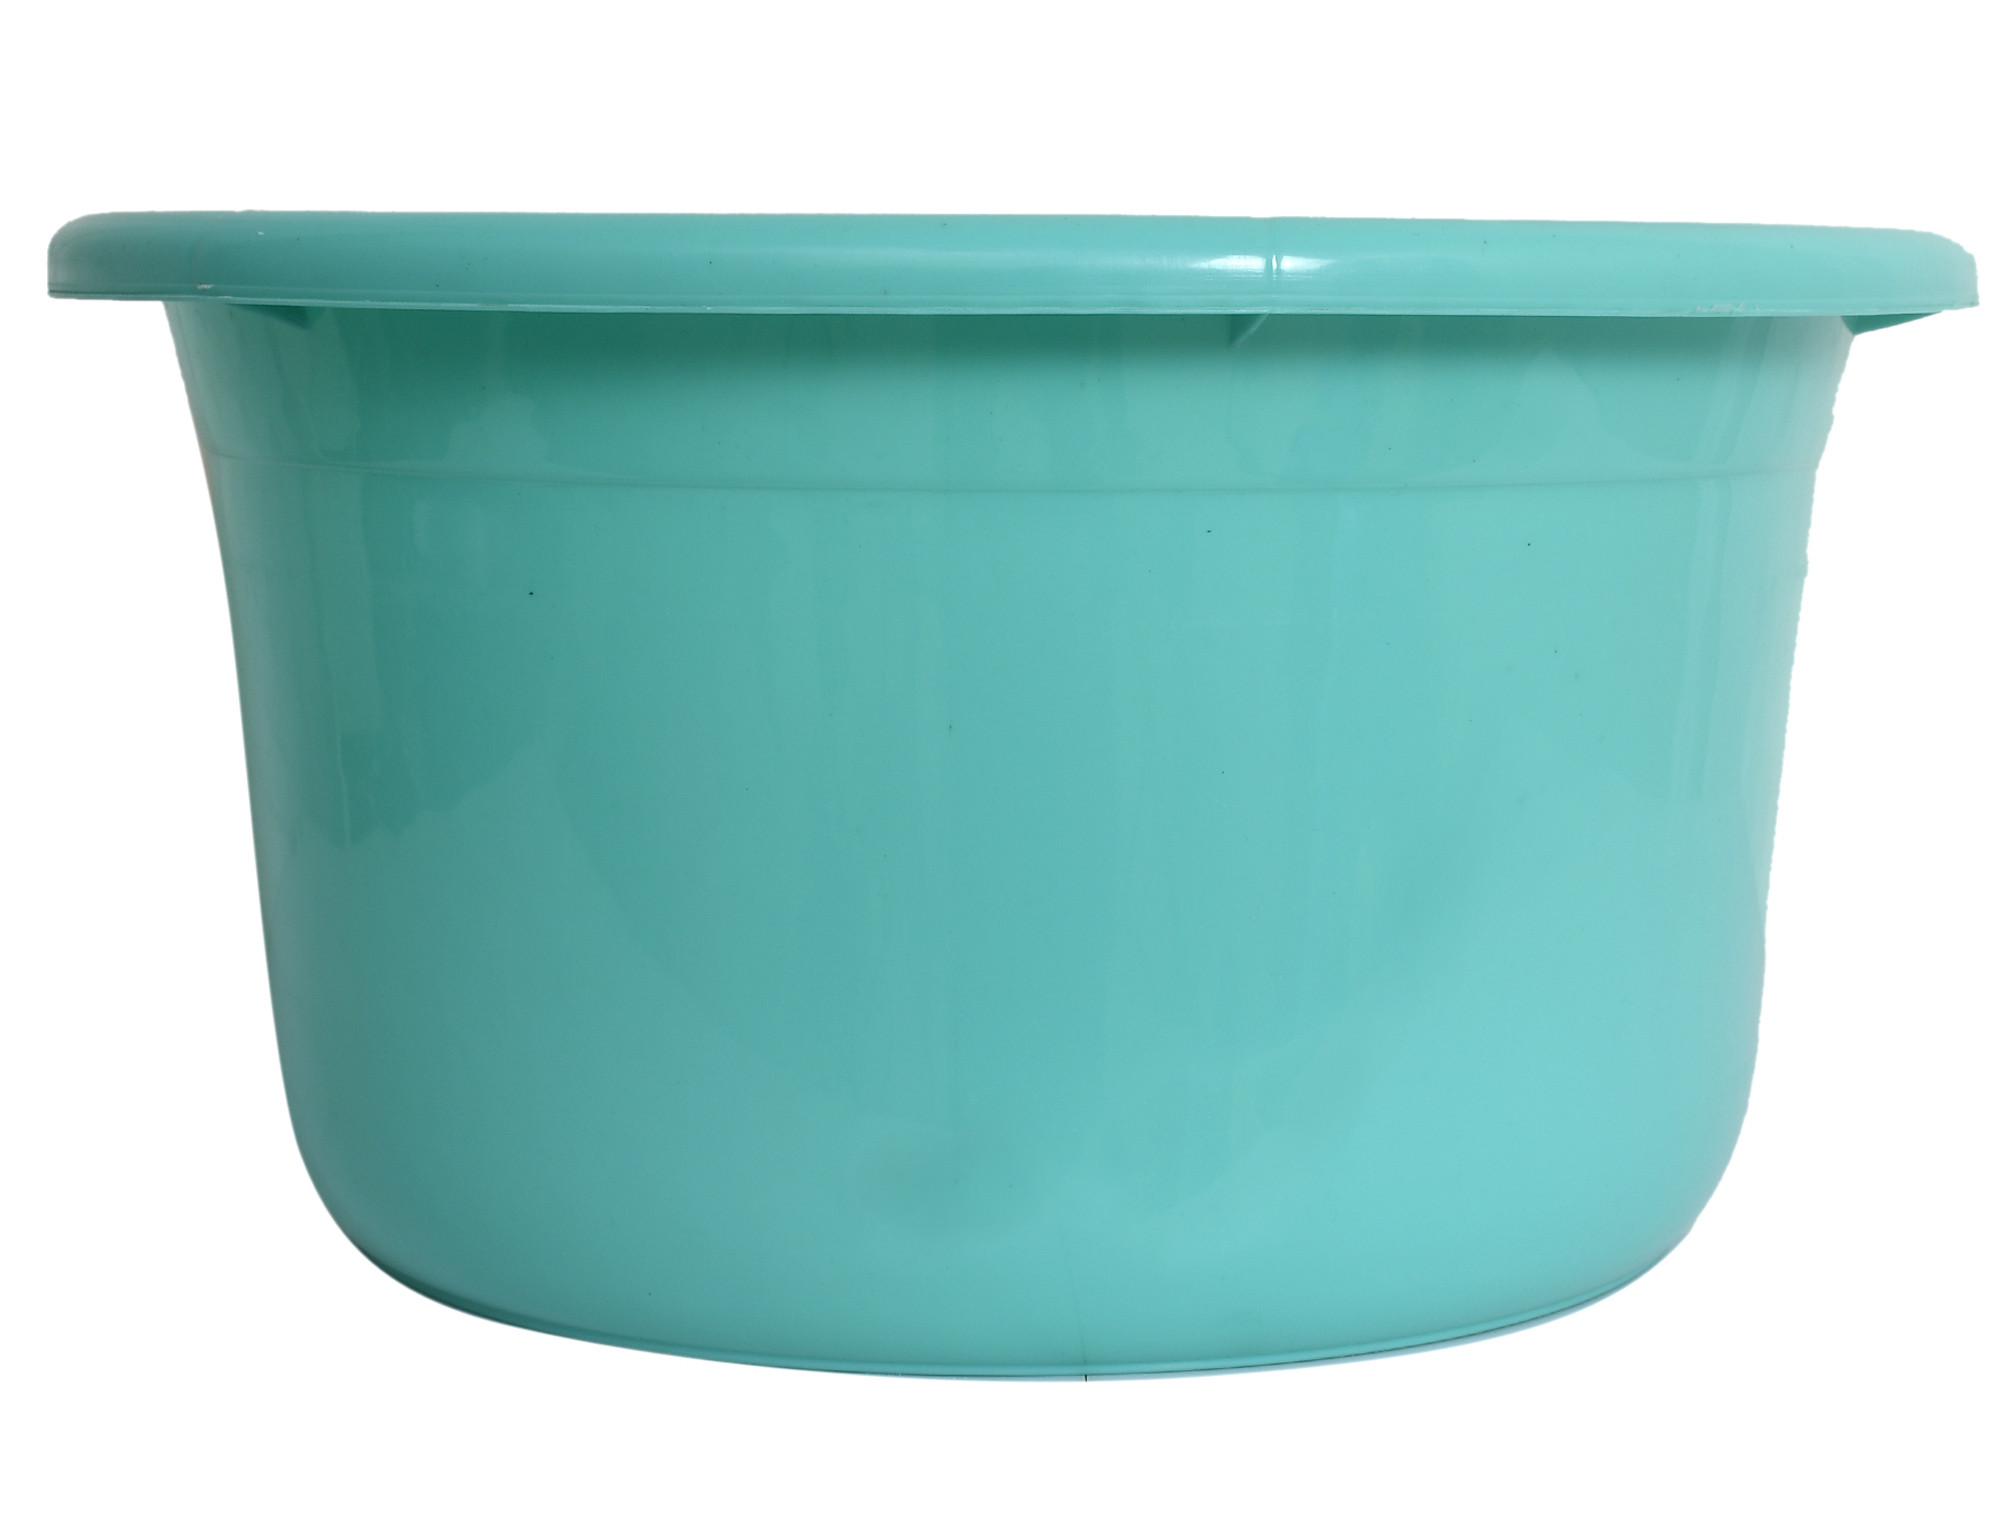 Kuber Industries 2 Pieces Unbreakable Plastic Multipurpose Bath Tub/Washing Tub 25 Ltr (Pink & Green)